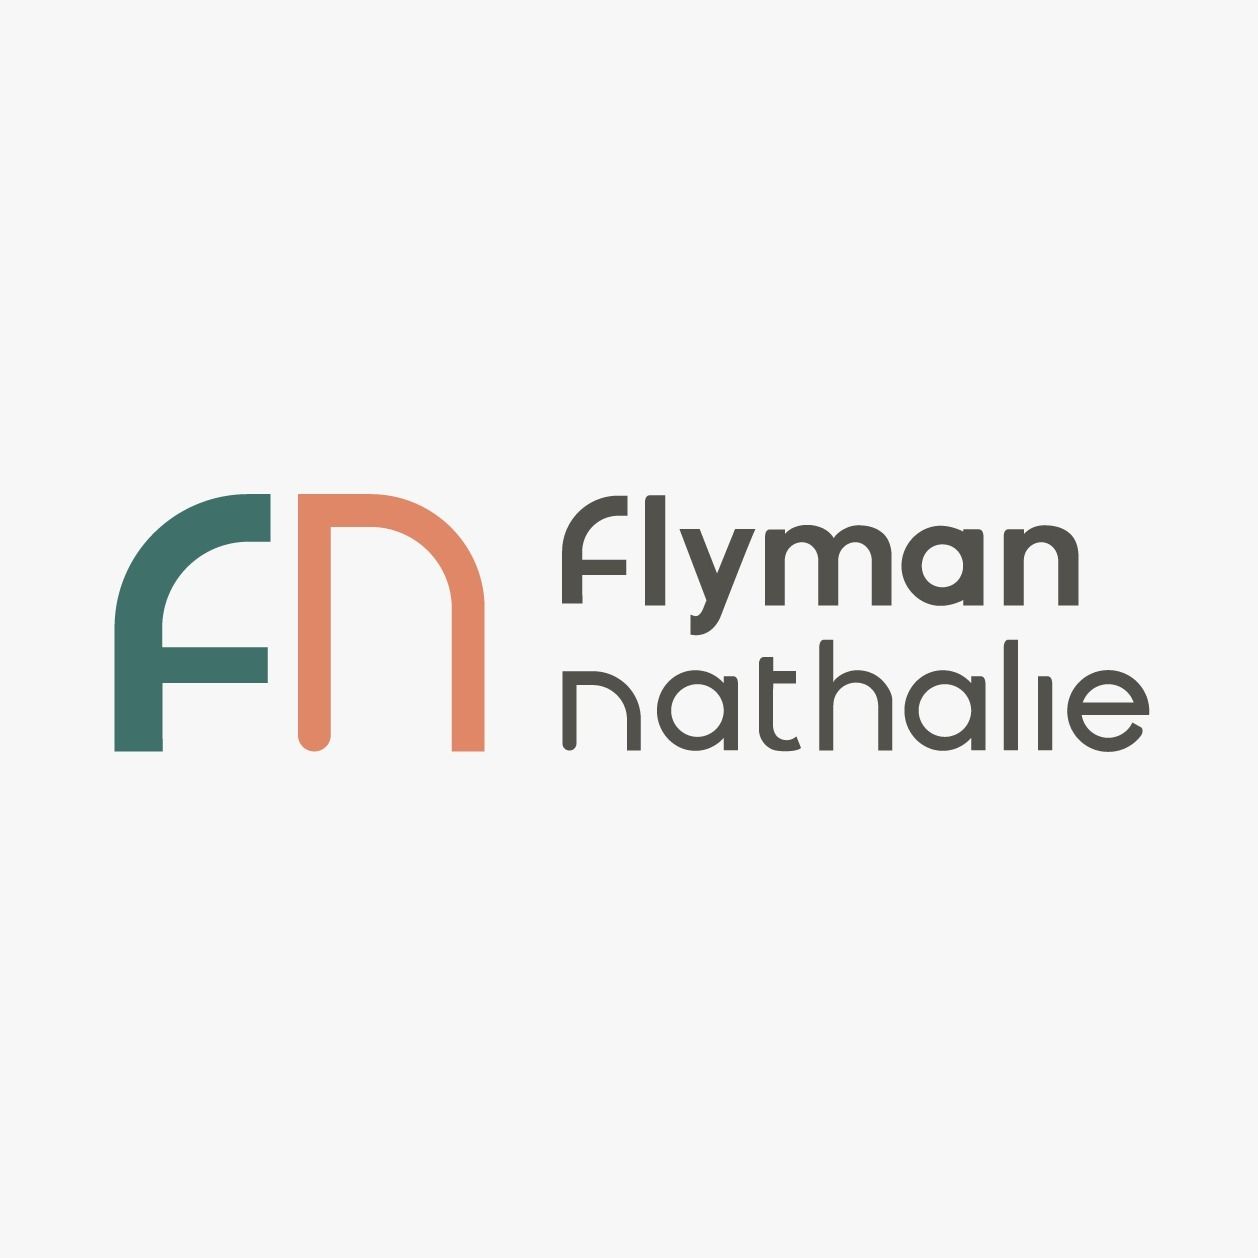 Flyman Nathalie